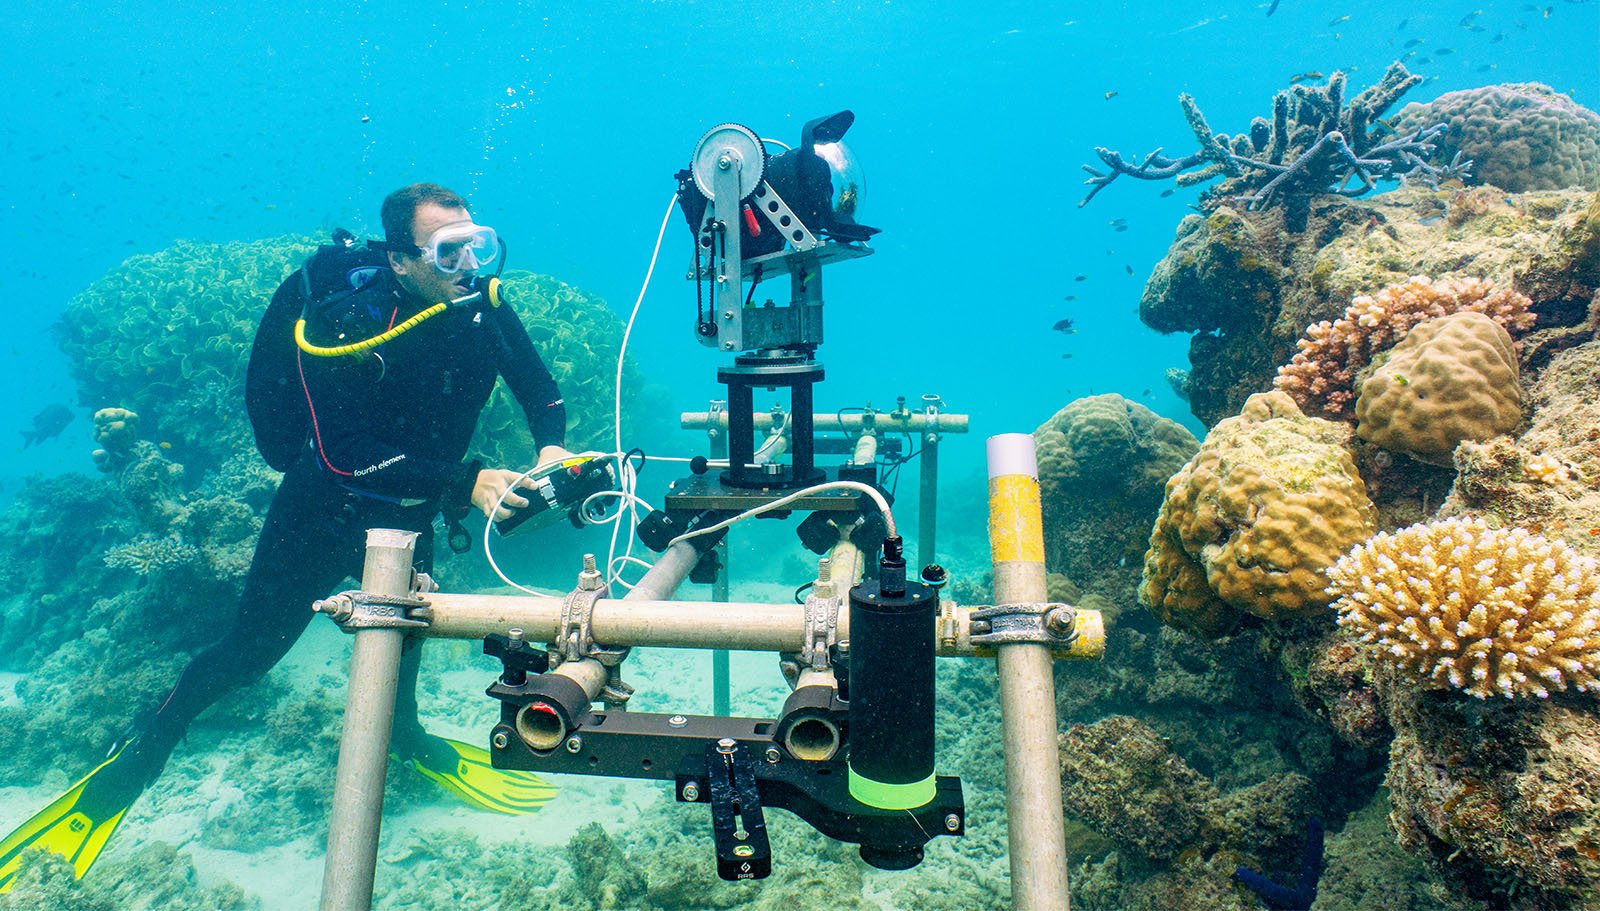 A scuba diver operates scientific underwater equipment near vibrant coral reefs in clear blue water.